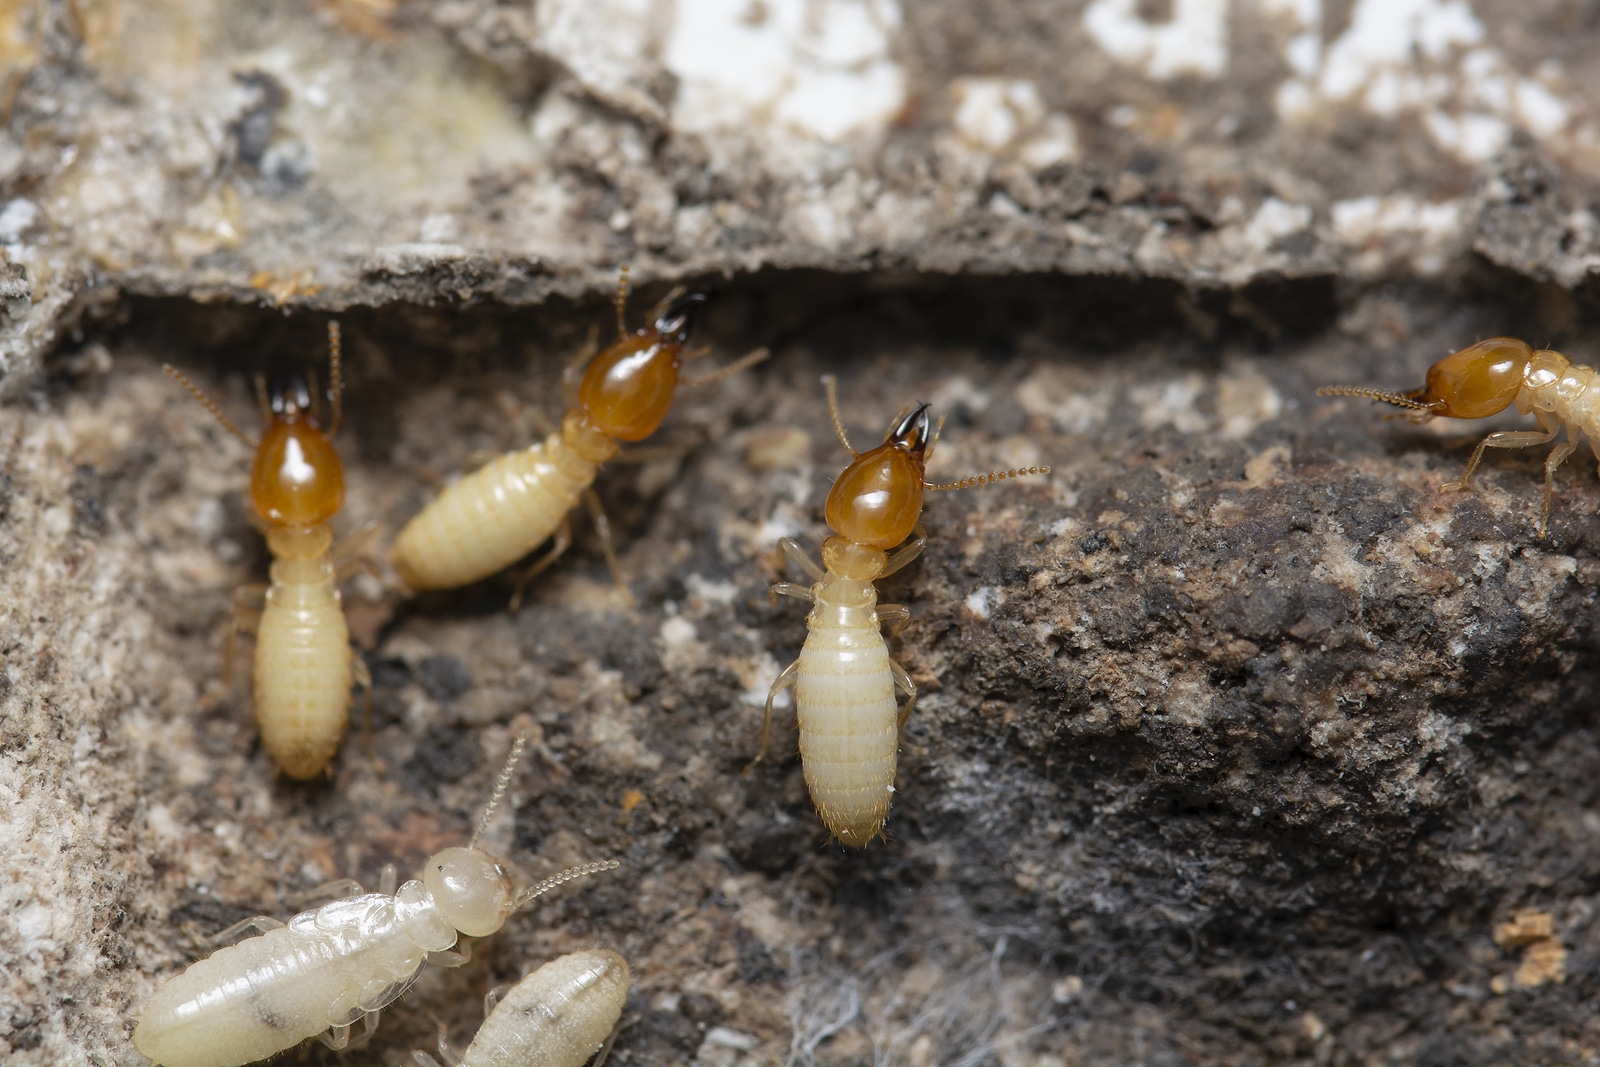 When Termites Swarm